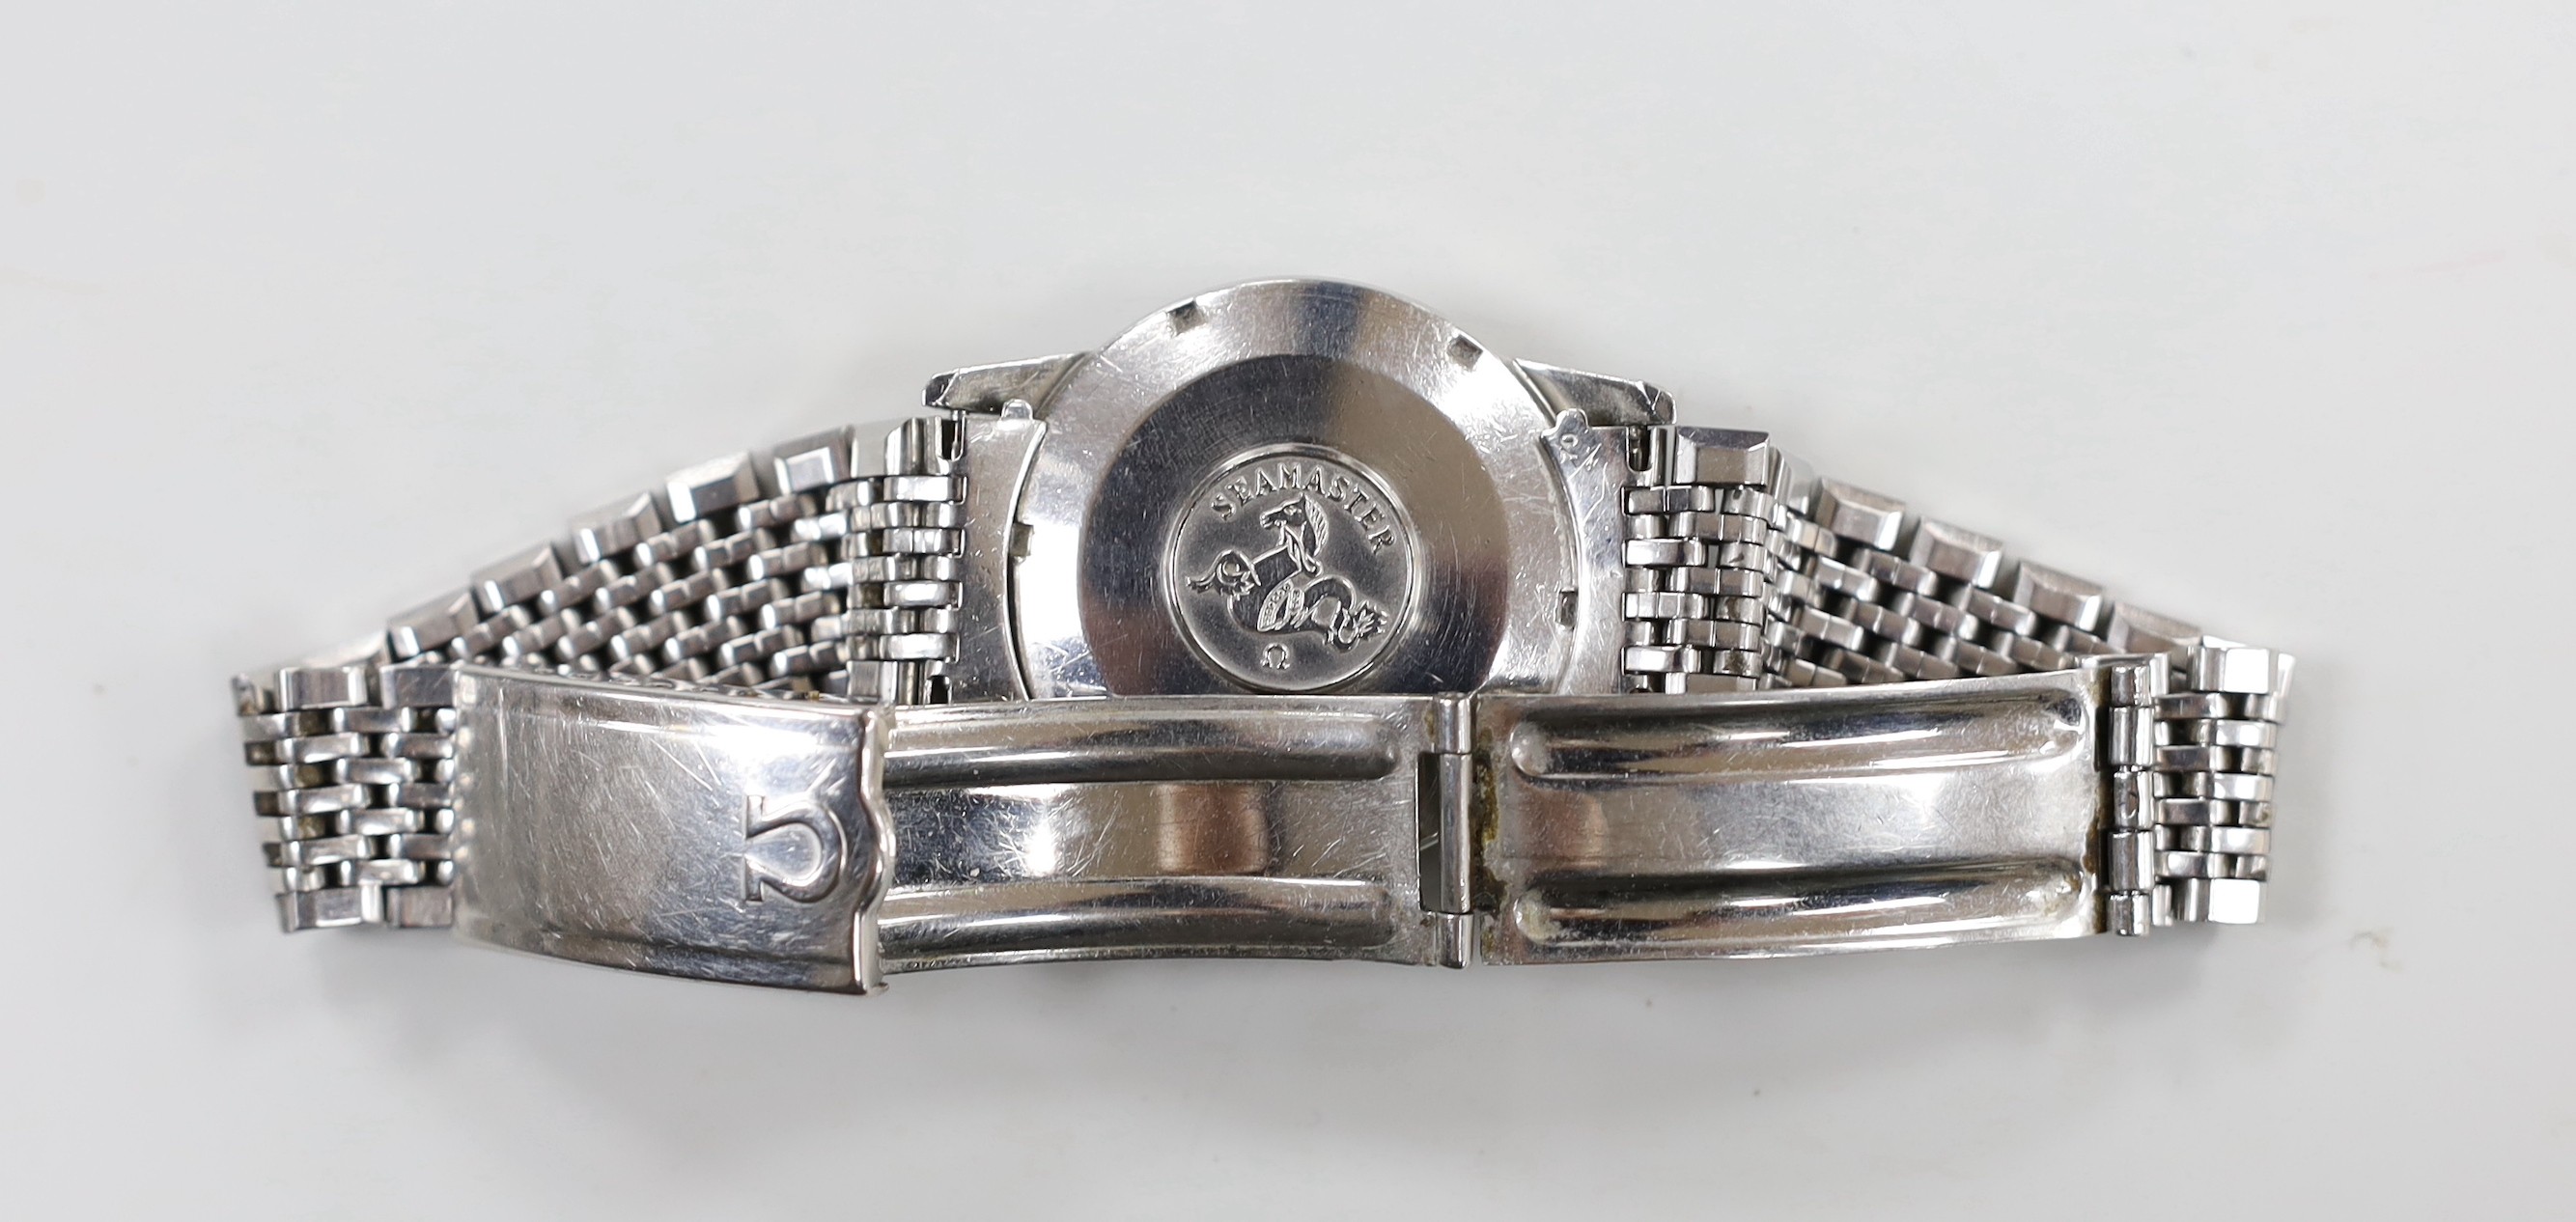 A gentleman's stainless steel Omega Seamaster manual wind wrist watch, on steel Omega bracelet, case diameter 35mm.